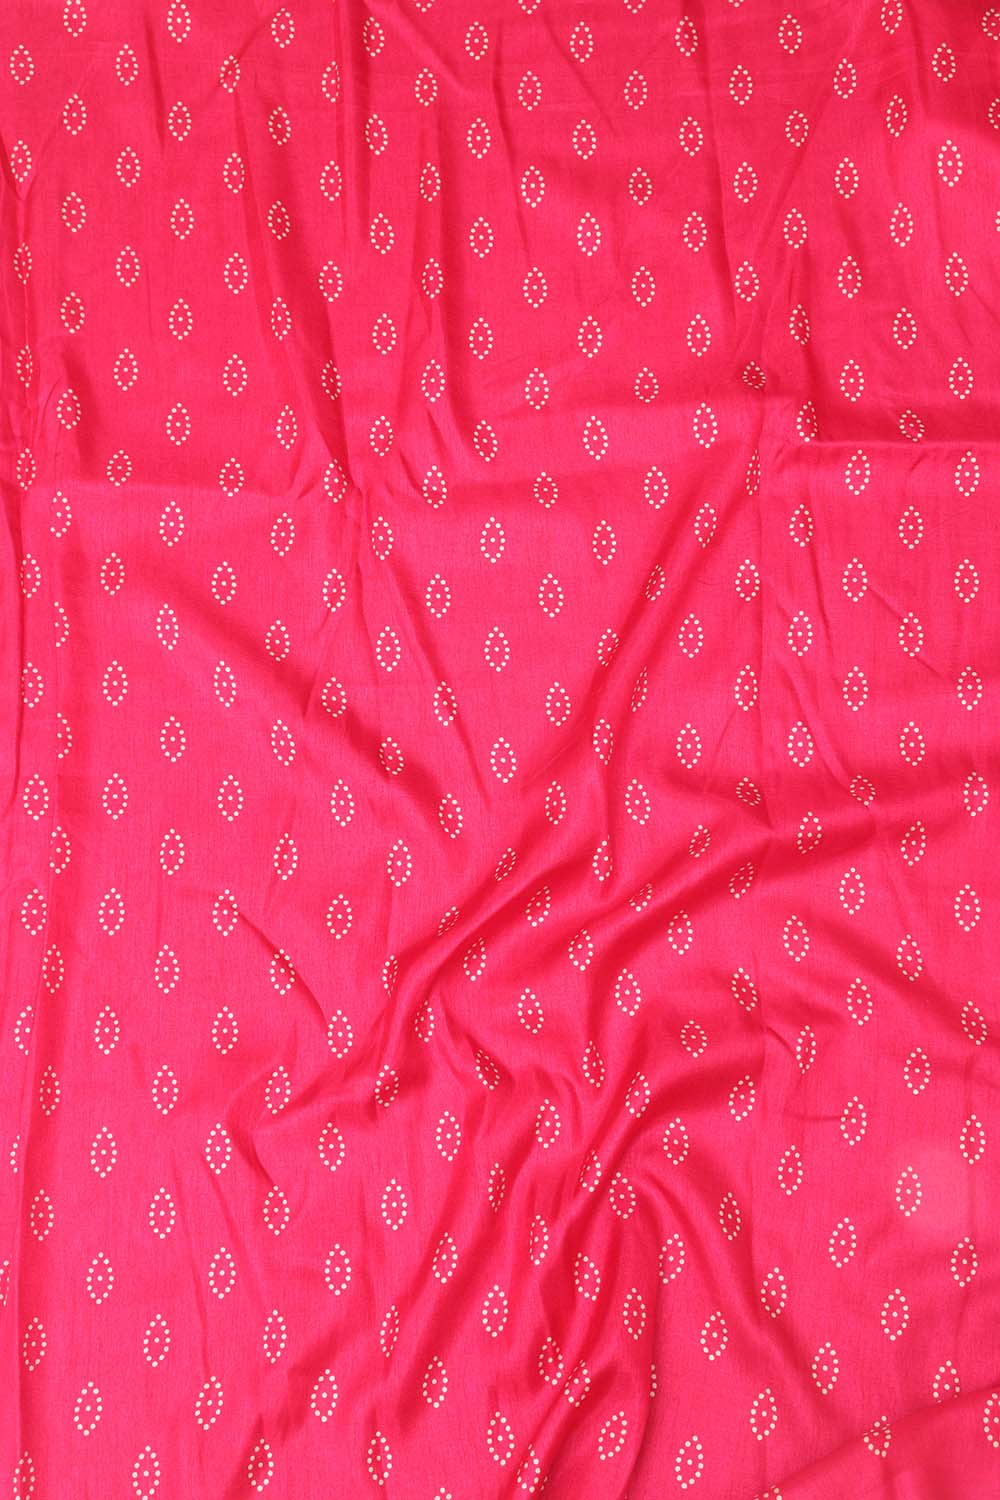 Stunning Pink Bandhani Silk Saree with Digital Print